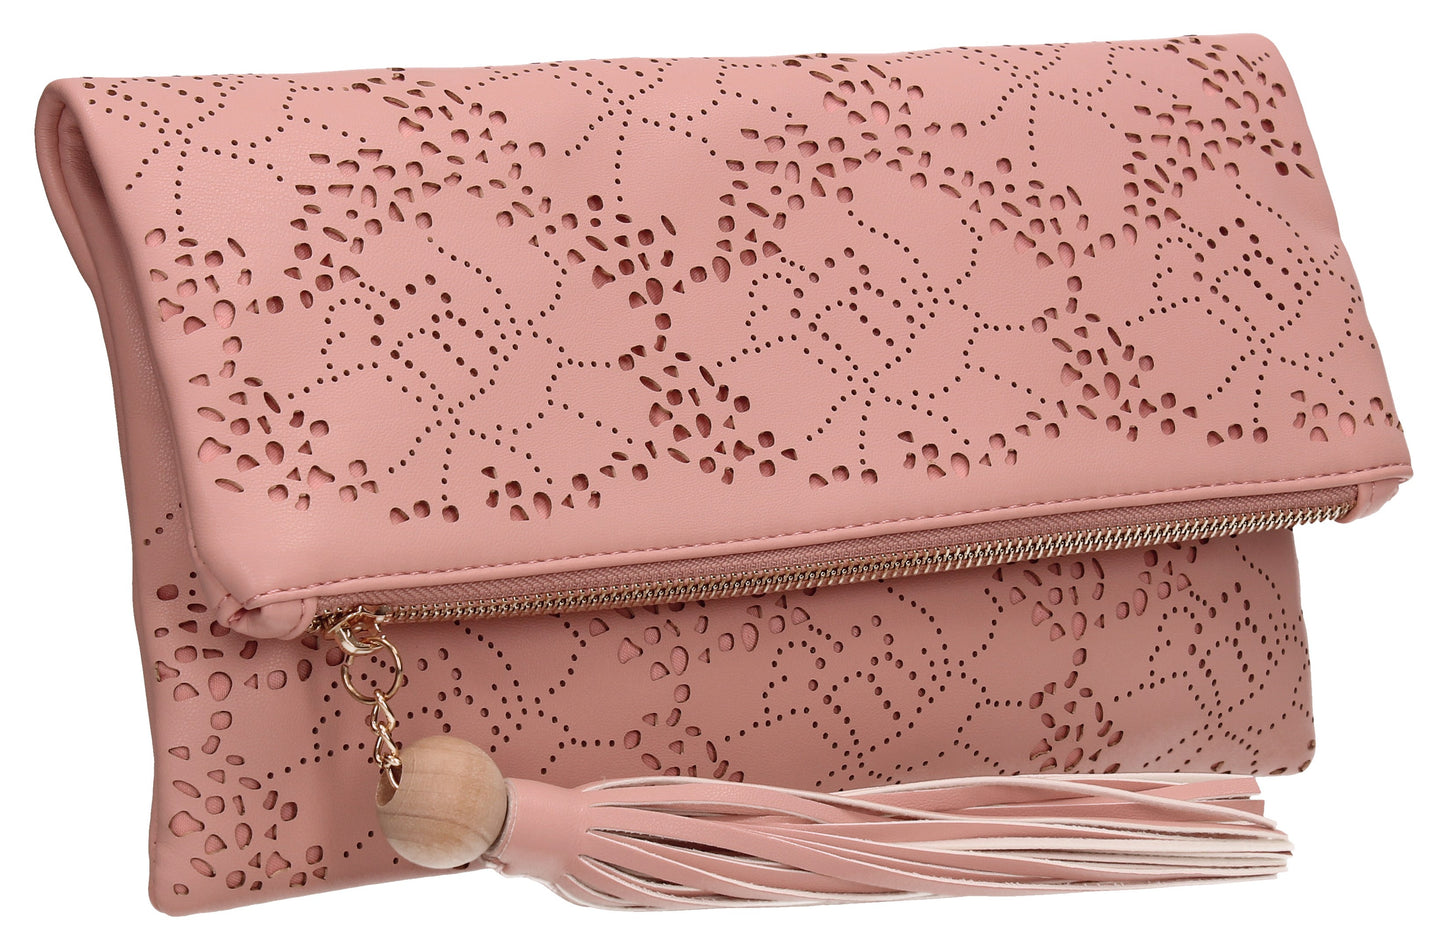 SWANKYSWANS Lena Clutch Bag Pink Beige Cute Cheap Clutch Bag For Weddings School and Work